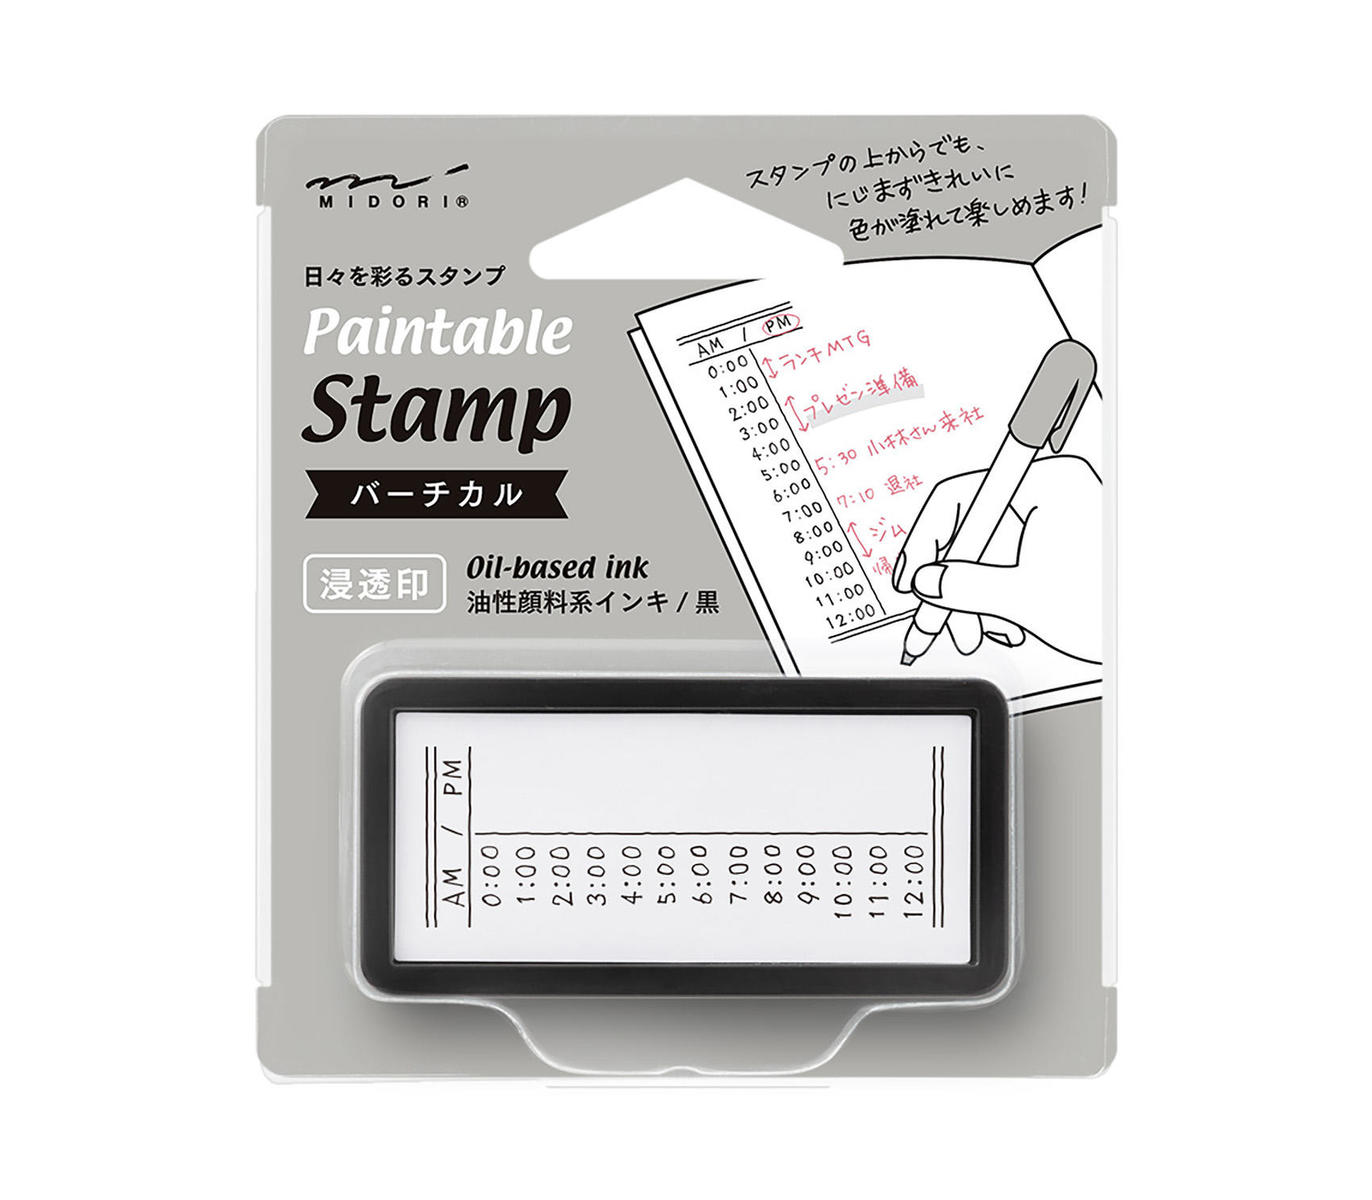 Midori Paintable Stamp - Health Management